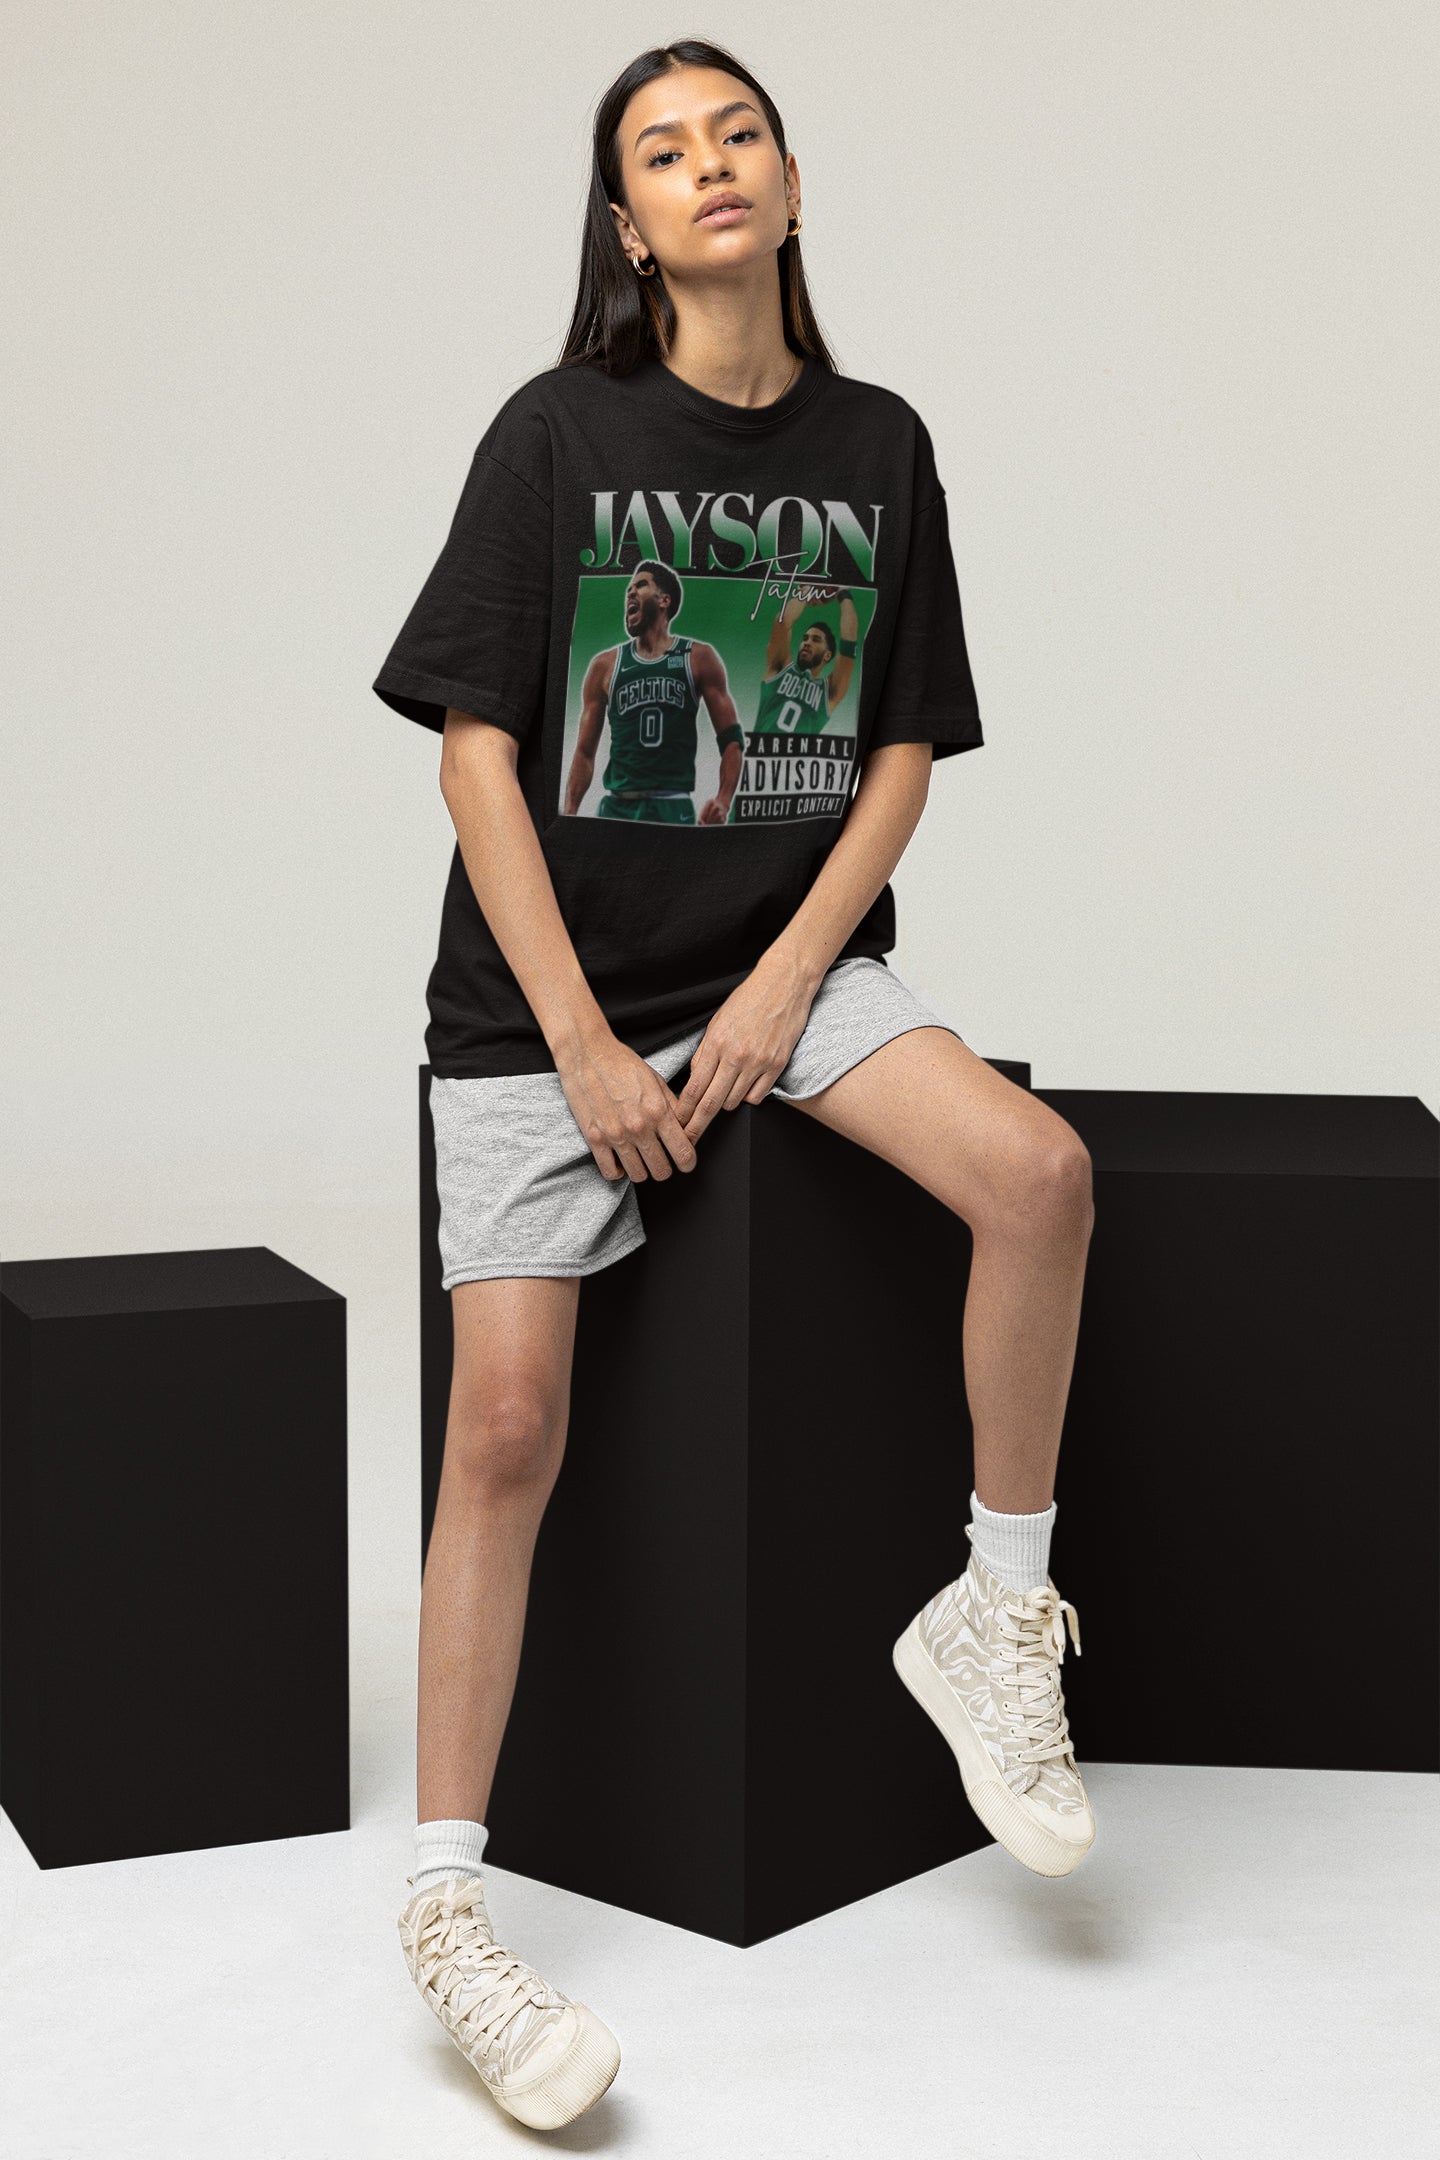 Jayson Tatum - Unisex t-shirt - Modern Vintage Apparel